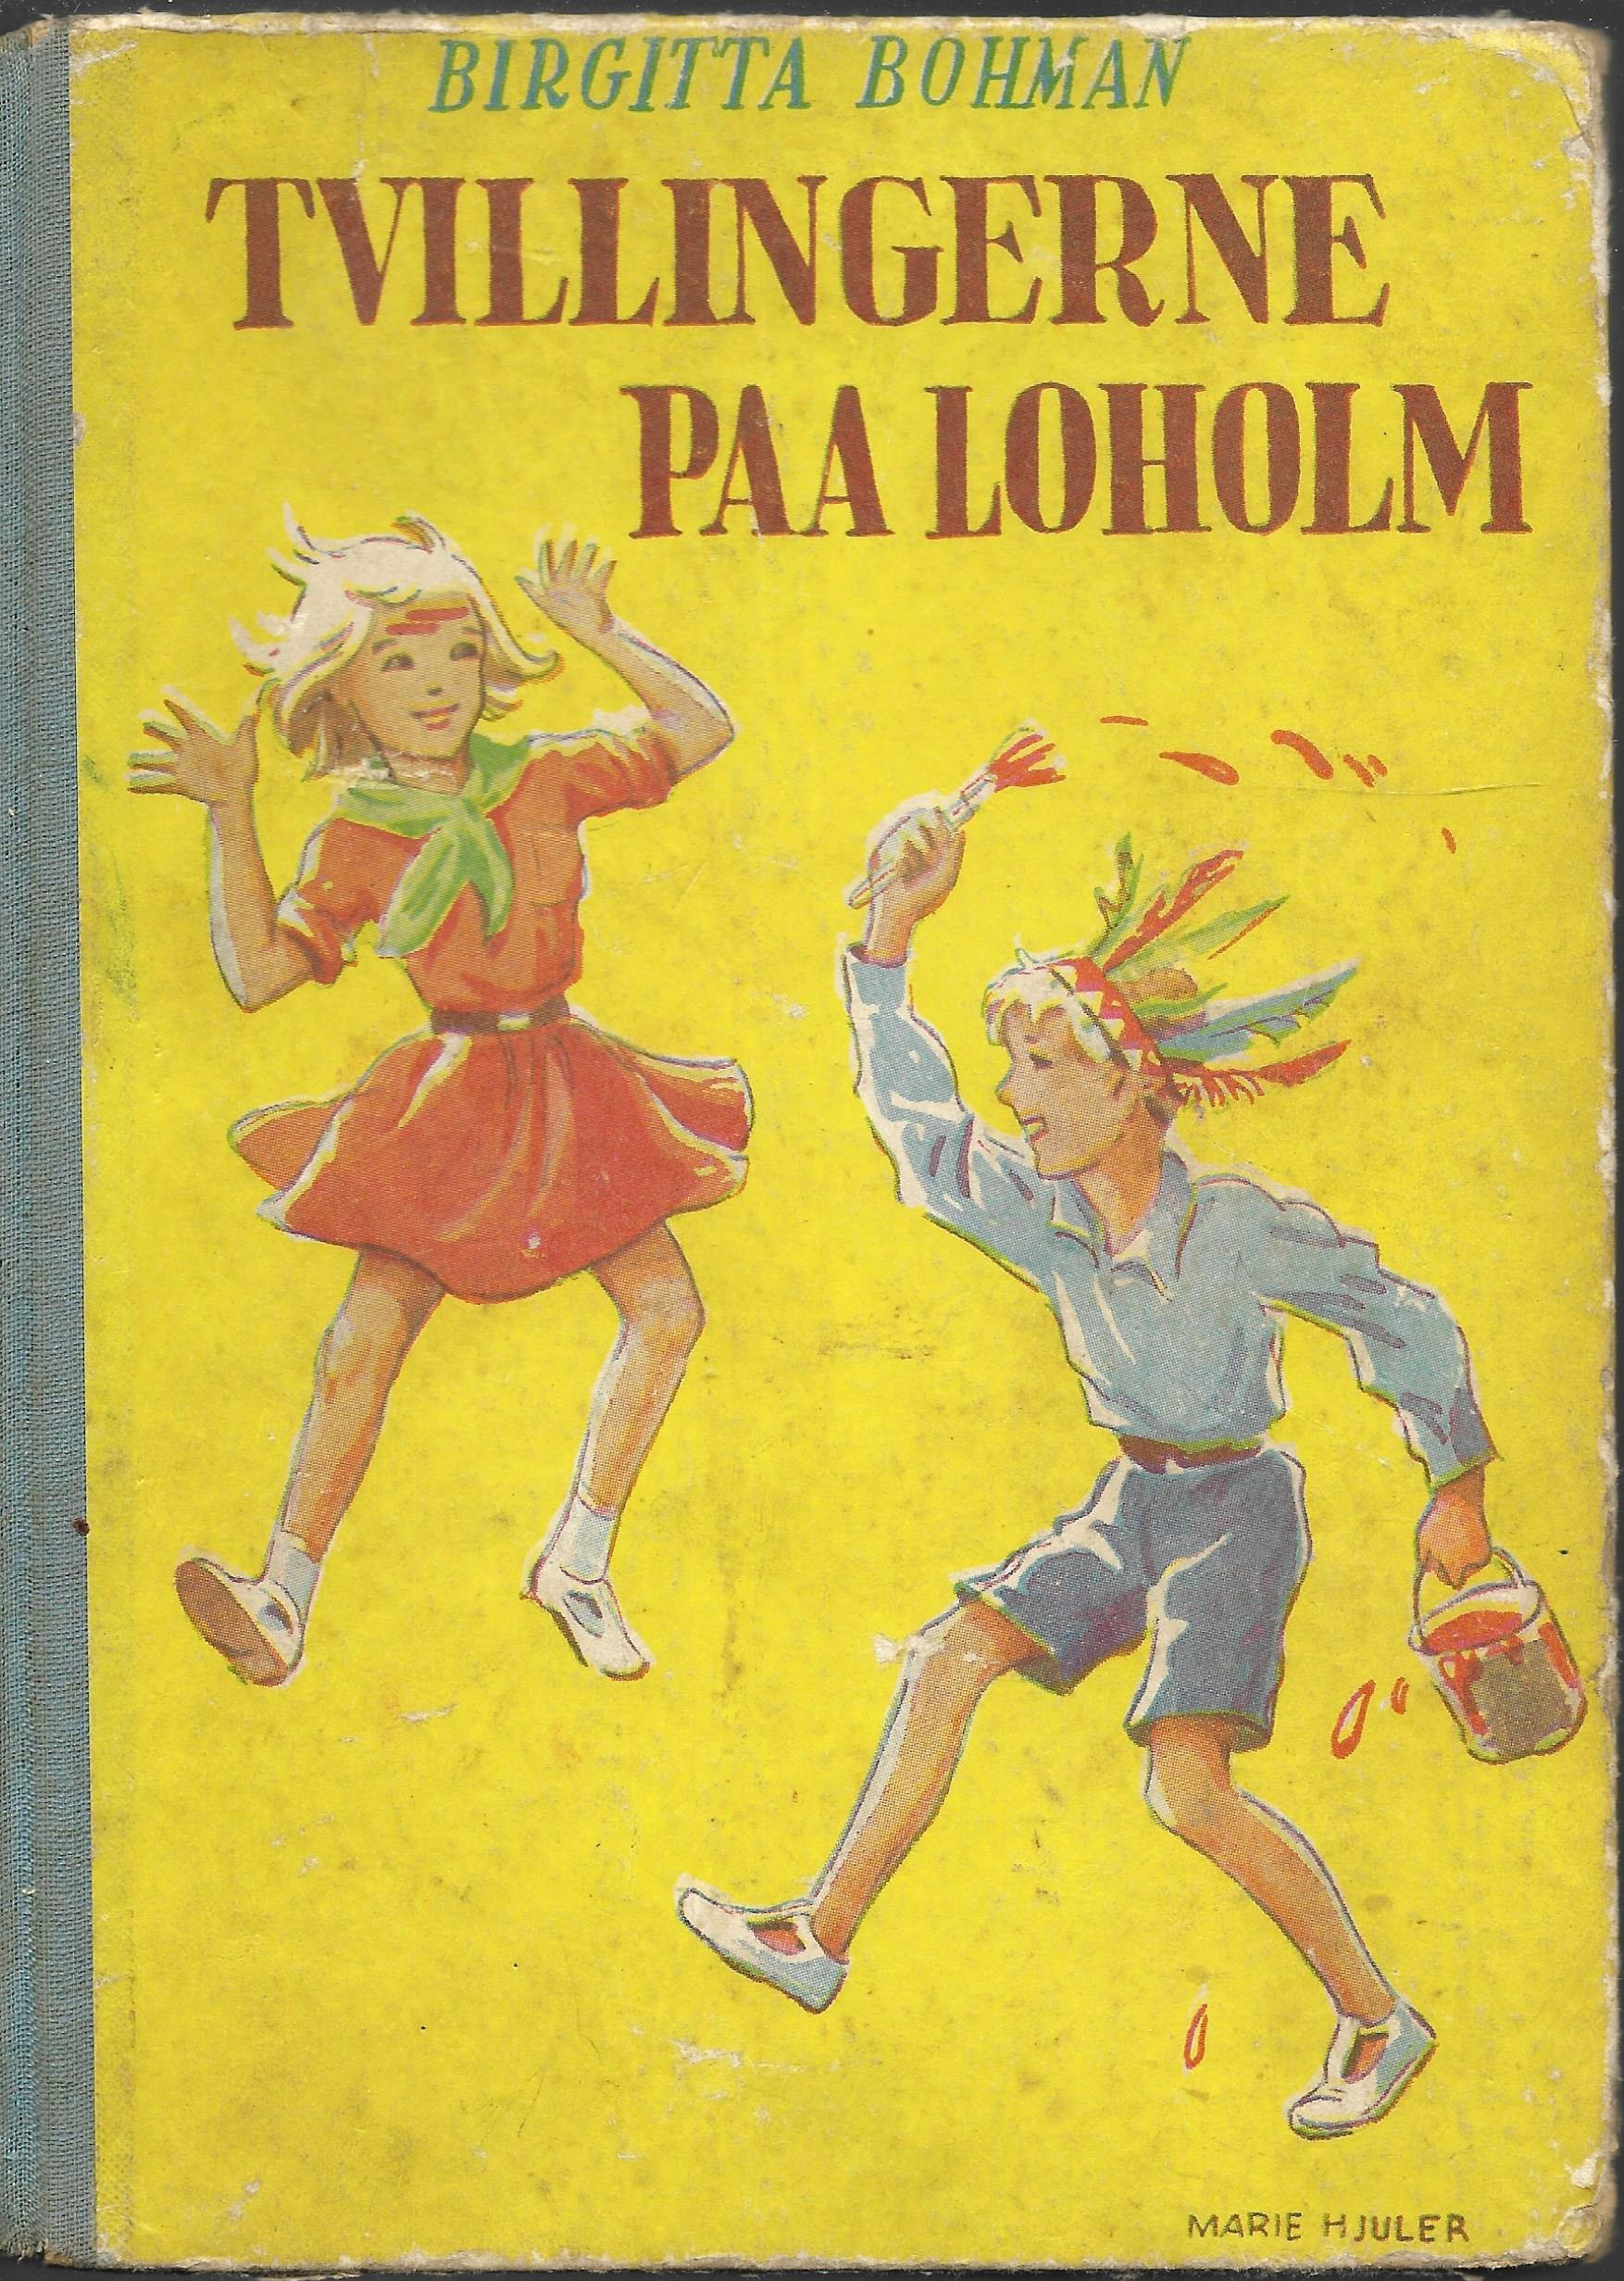 Tvillingerne paa Loholm - Birgitta Bohman 1947-1